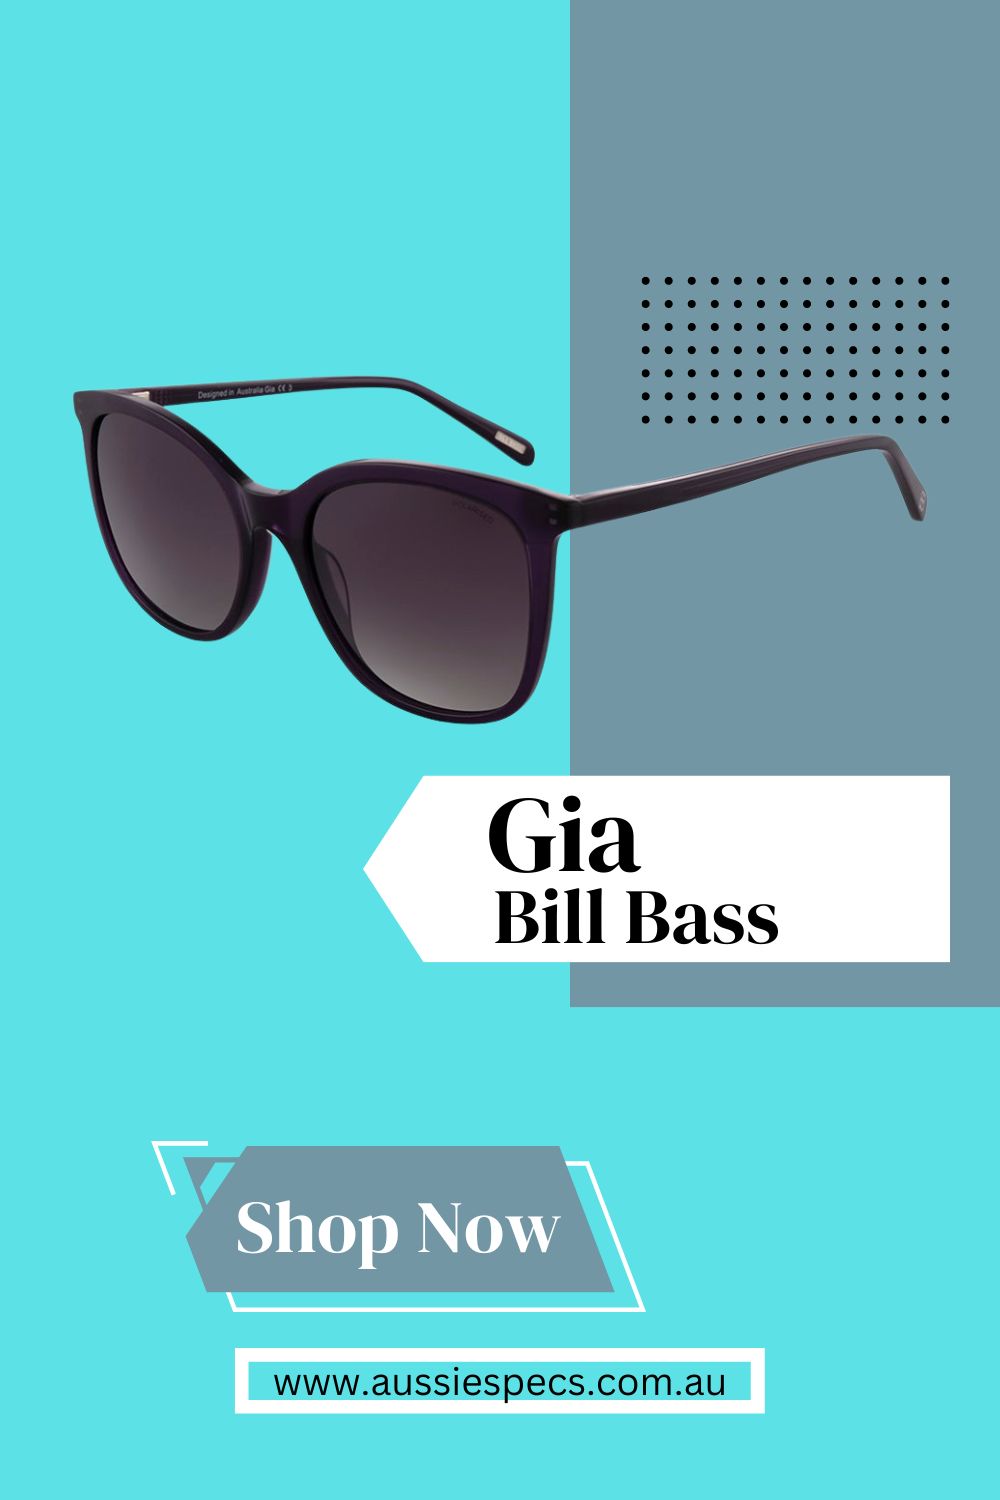 Bill Bass Gia | Buy Sunglasses Coffs Harbour